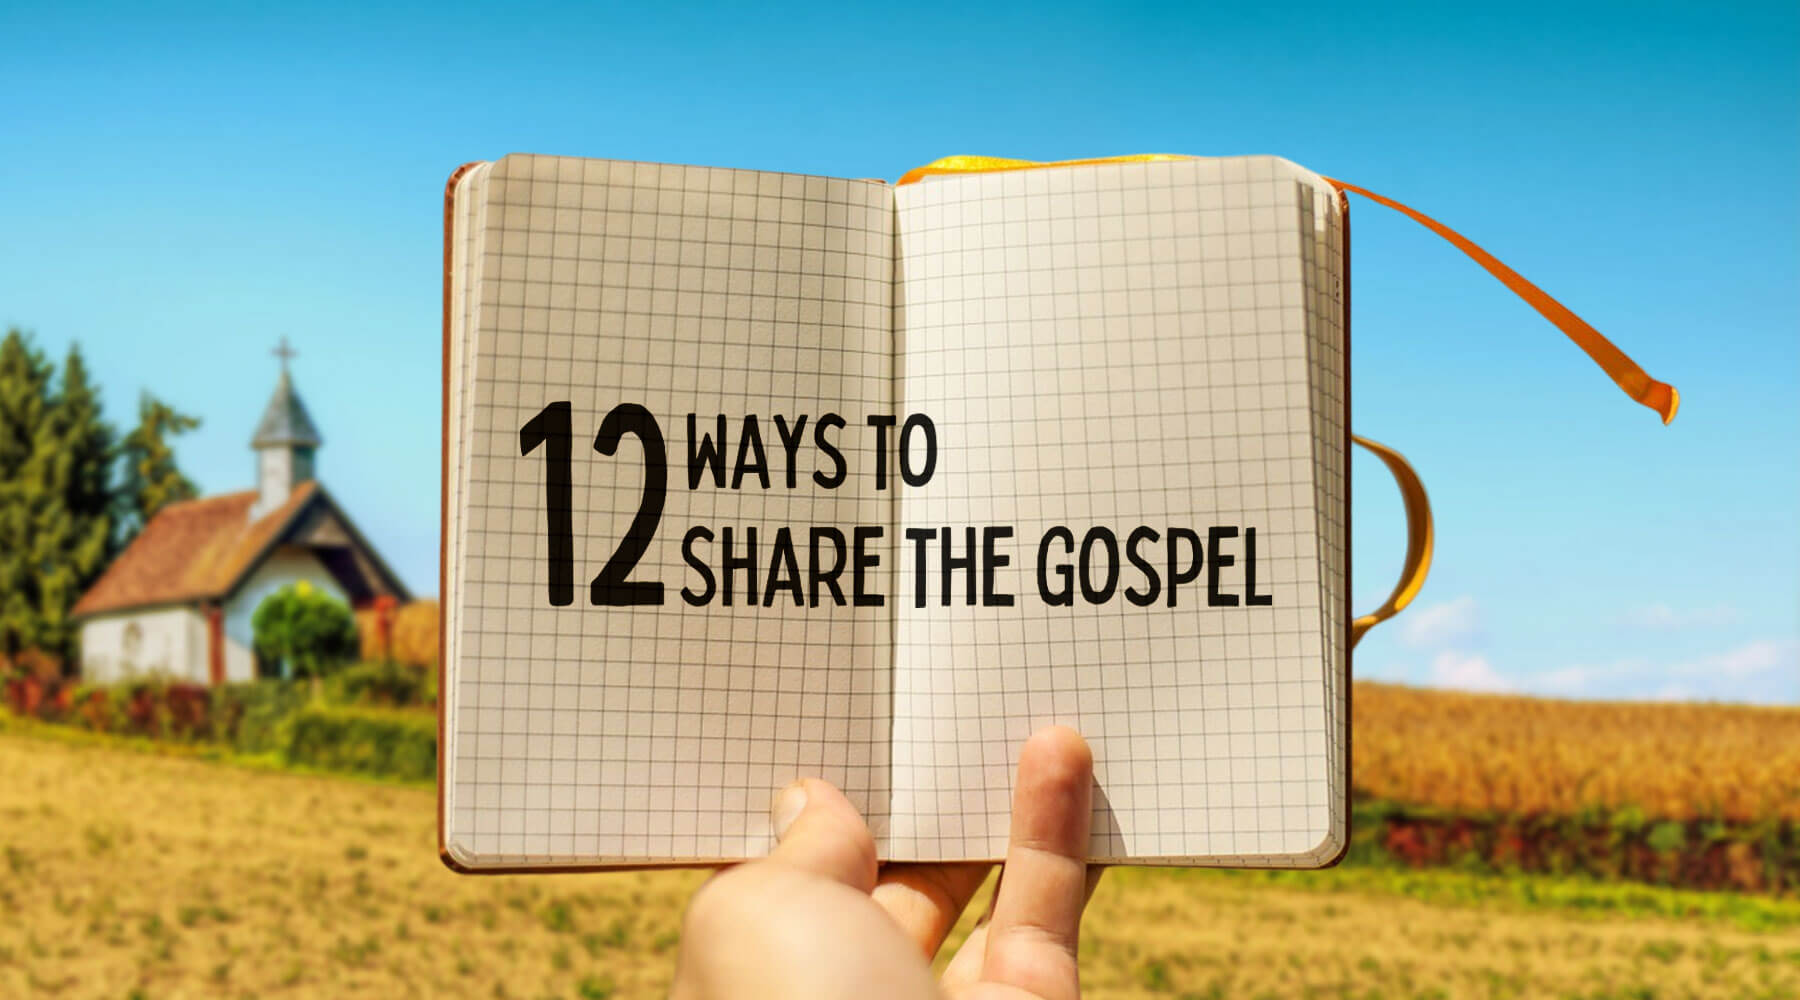 How to spread the Gospel